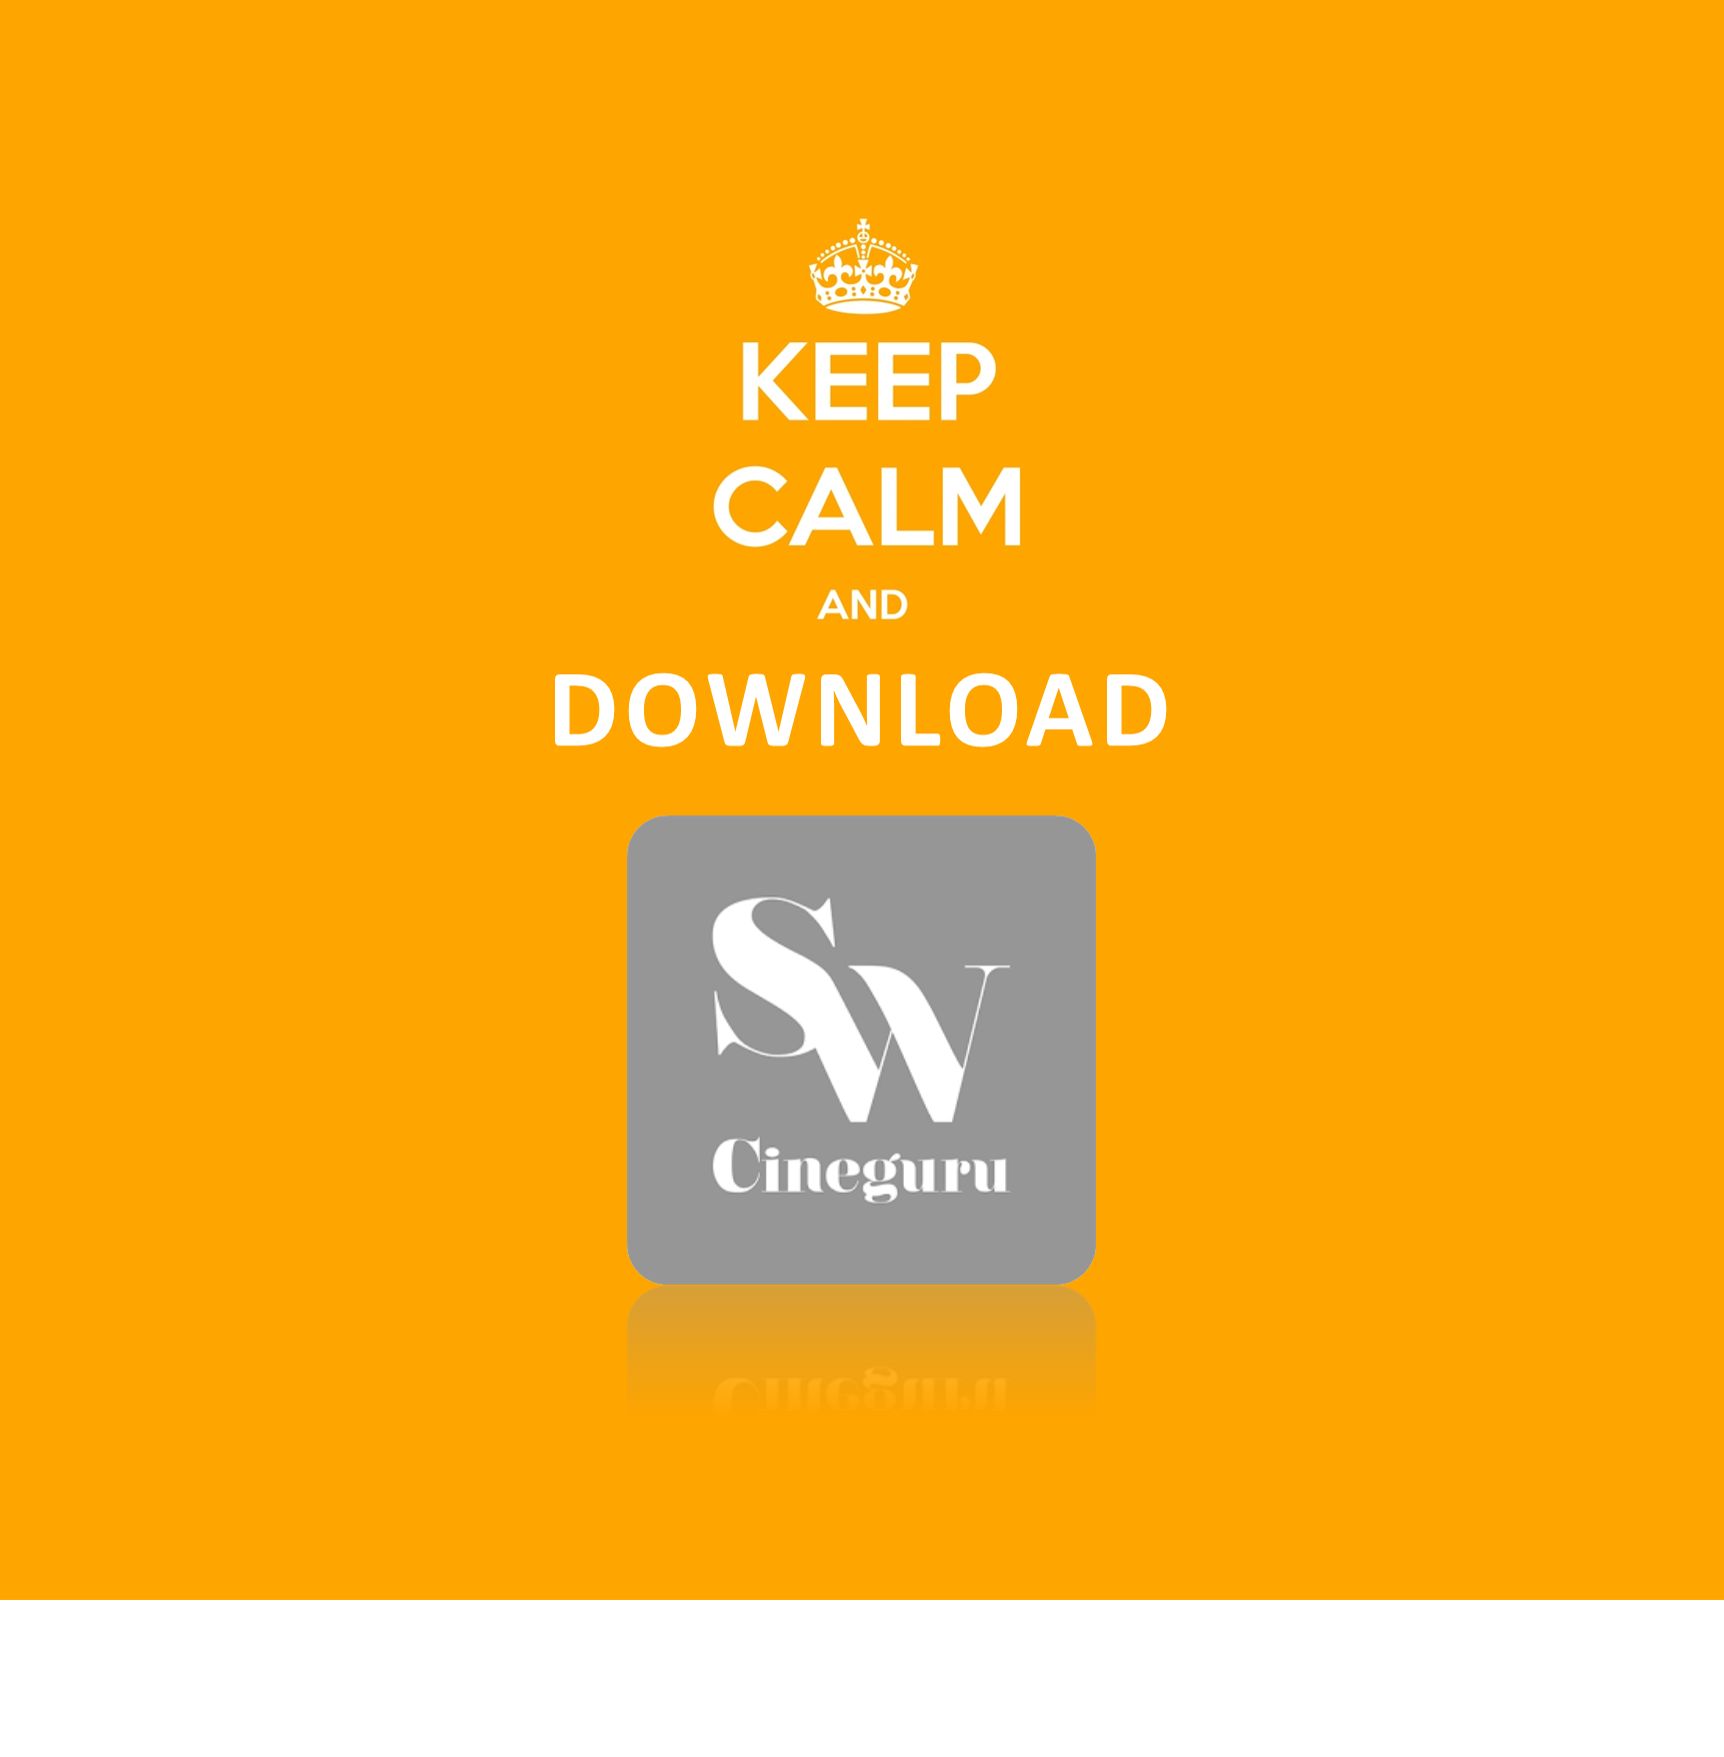 keep calm and download cineguru